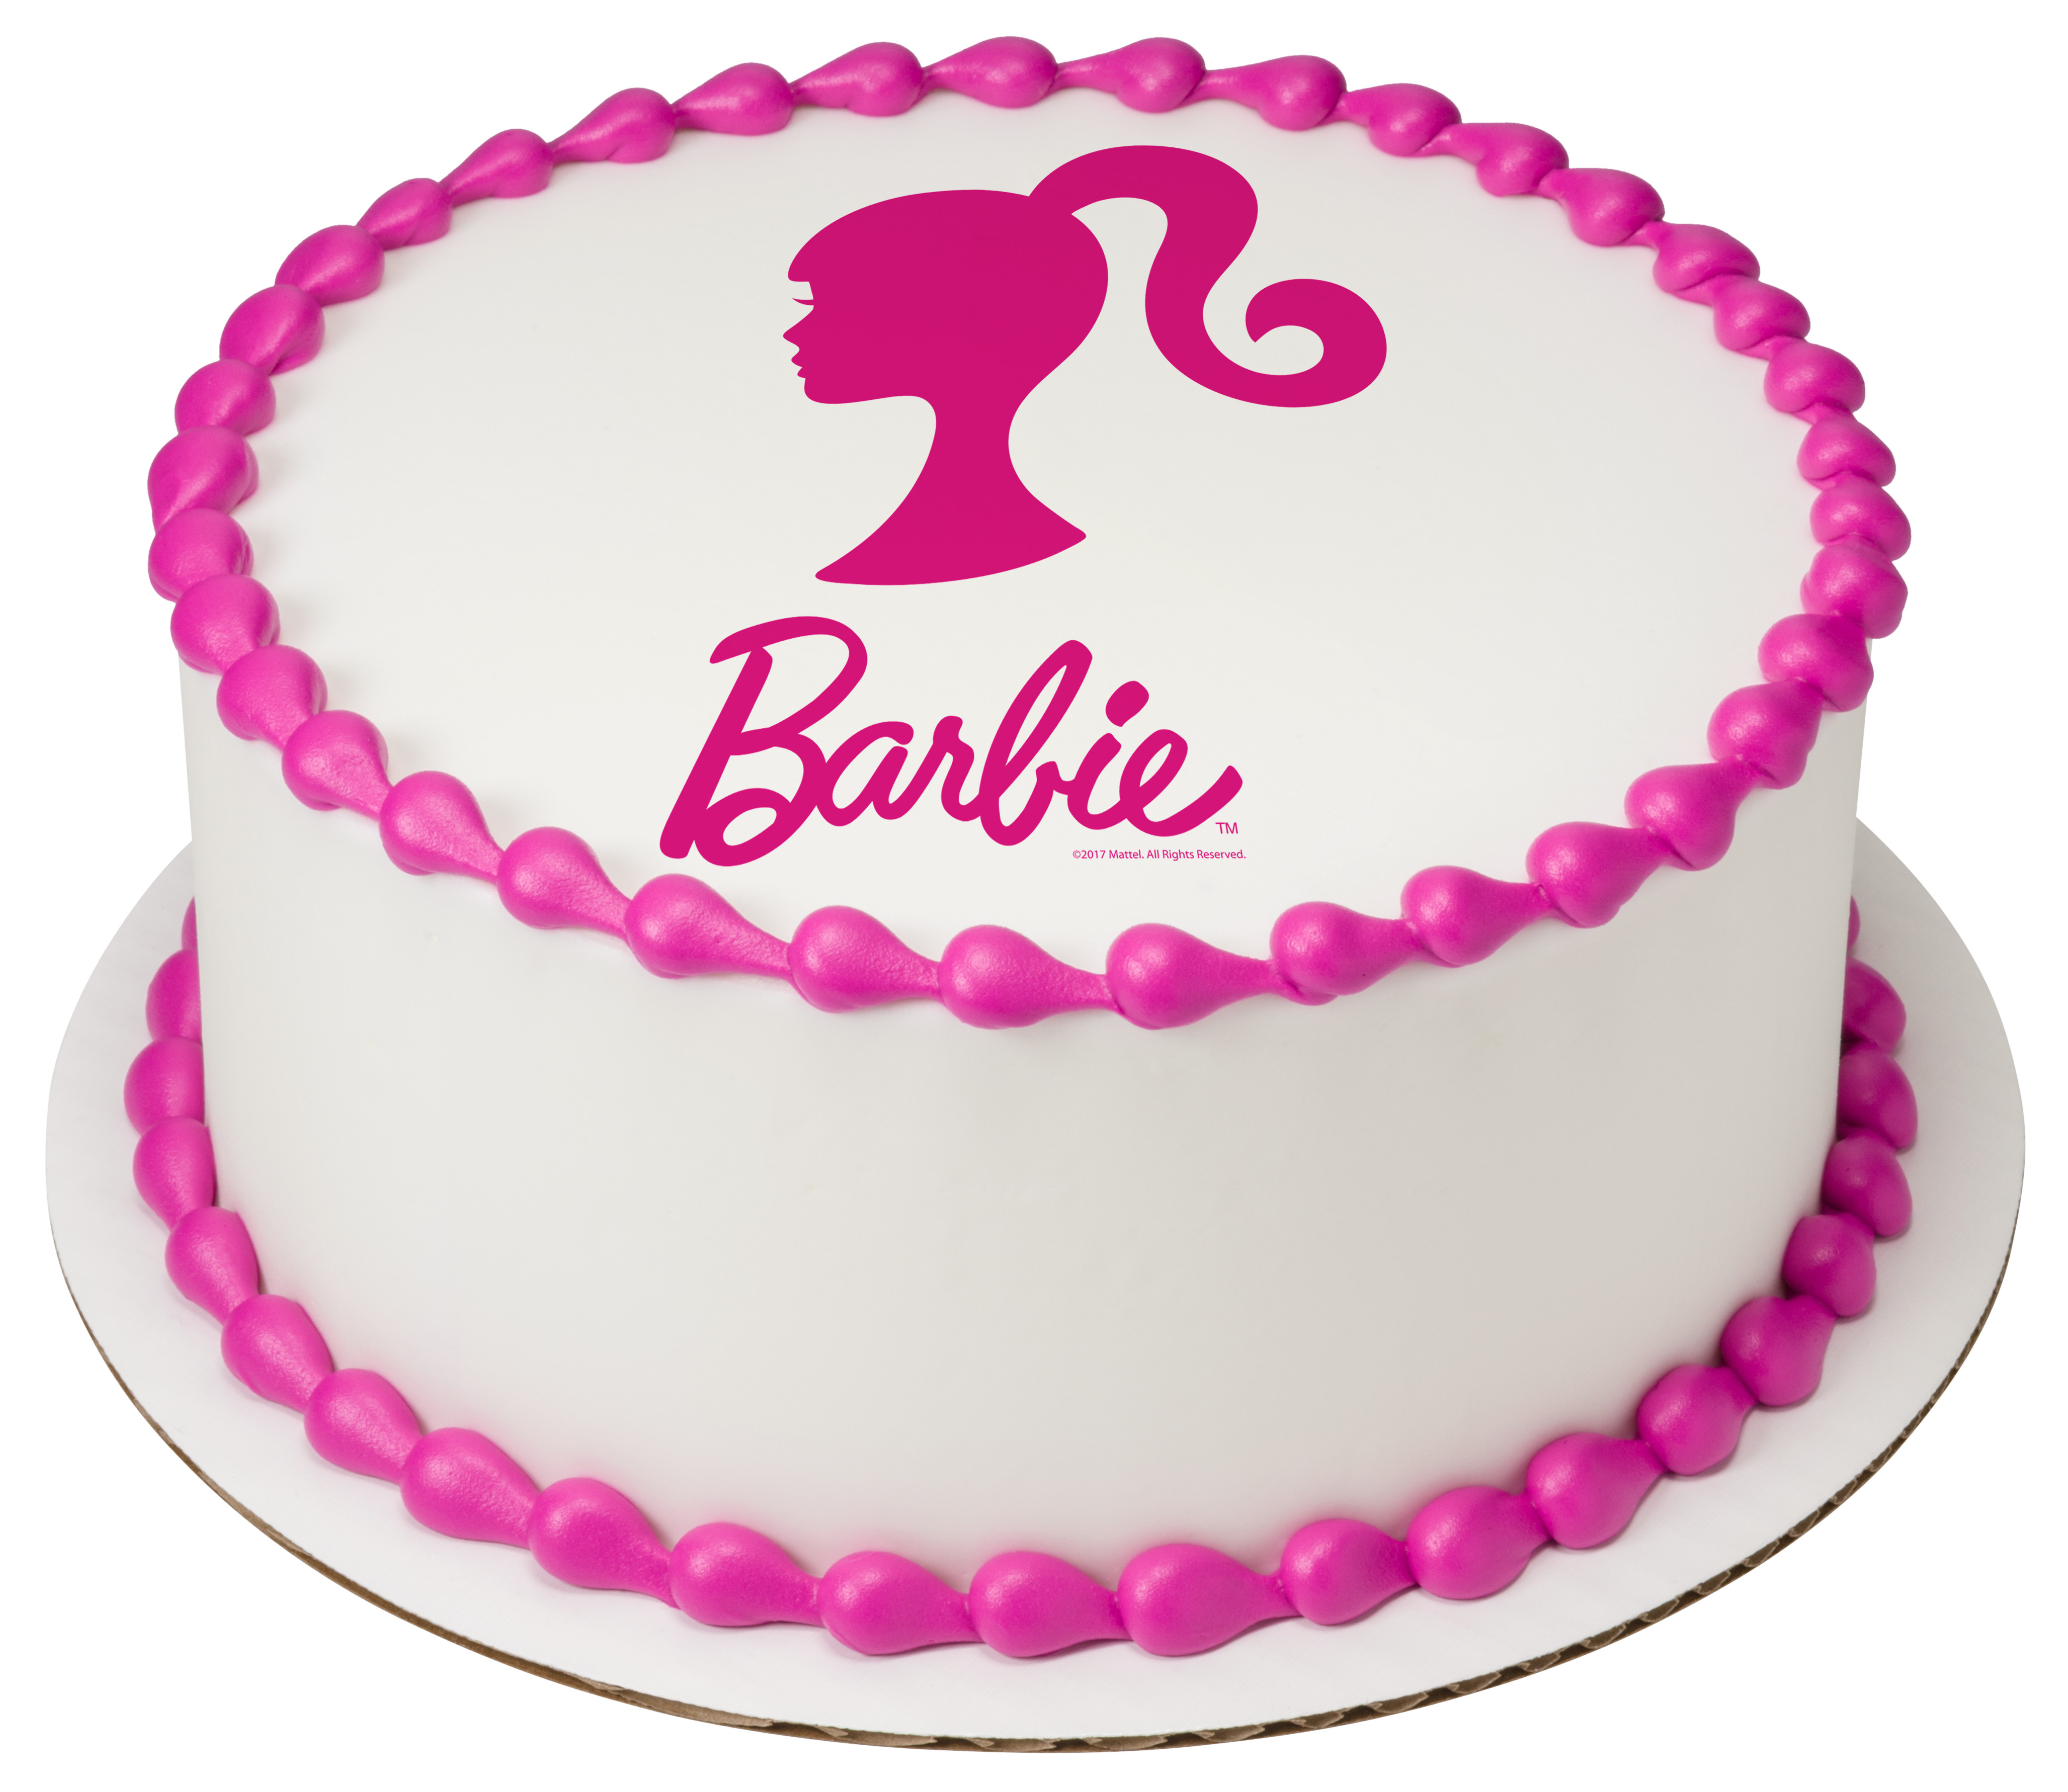 Торт Барби. Торт с надписью Барби. Торт розовый Барби. Торт в стиле Барби. Надписи на торт печатью